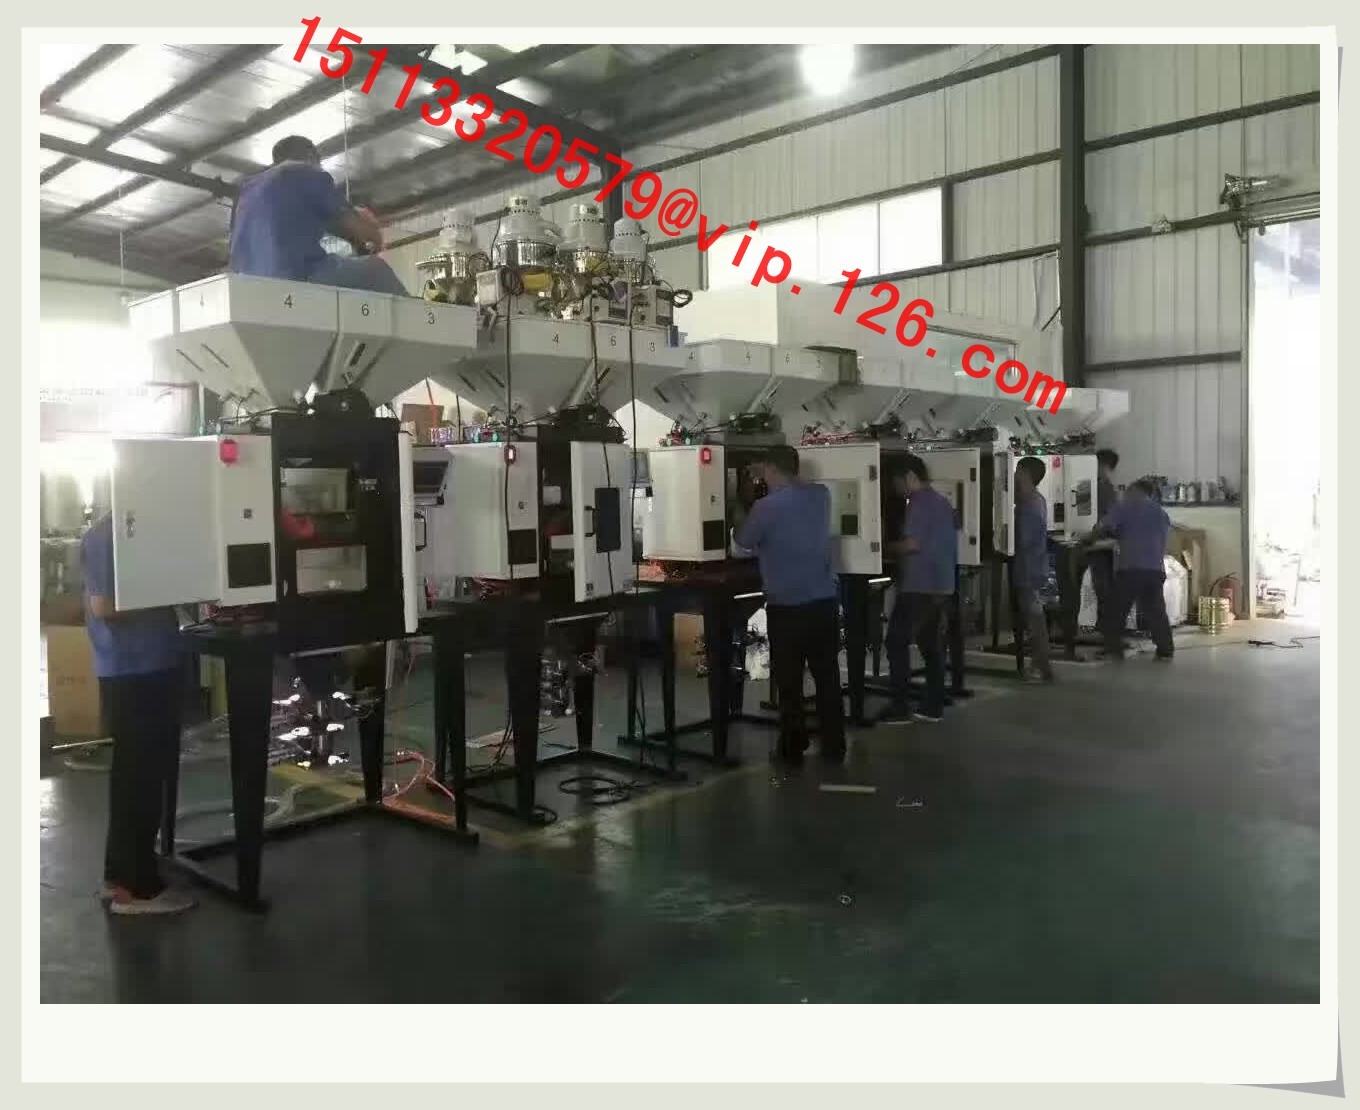 500kg/hr output capacity gravimetric mixer/China Gravimetric Mixers / Weighing Mixer OEM Supplier